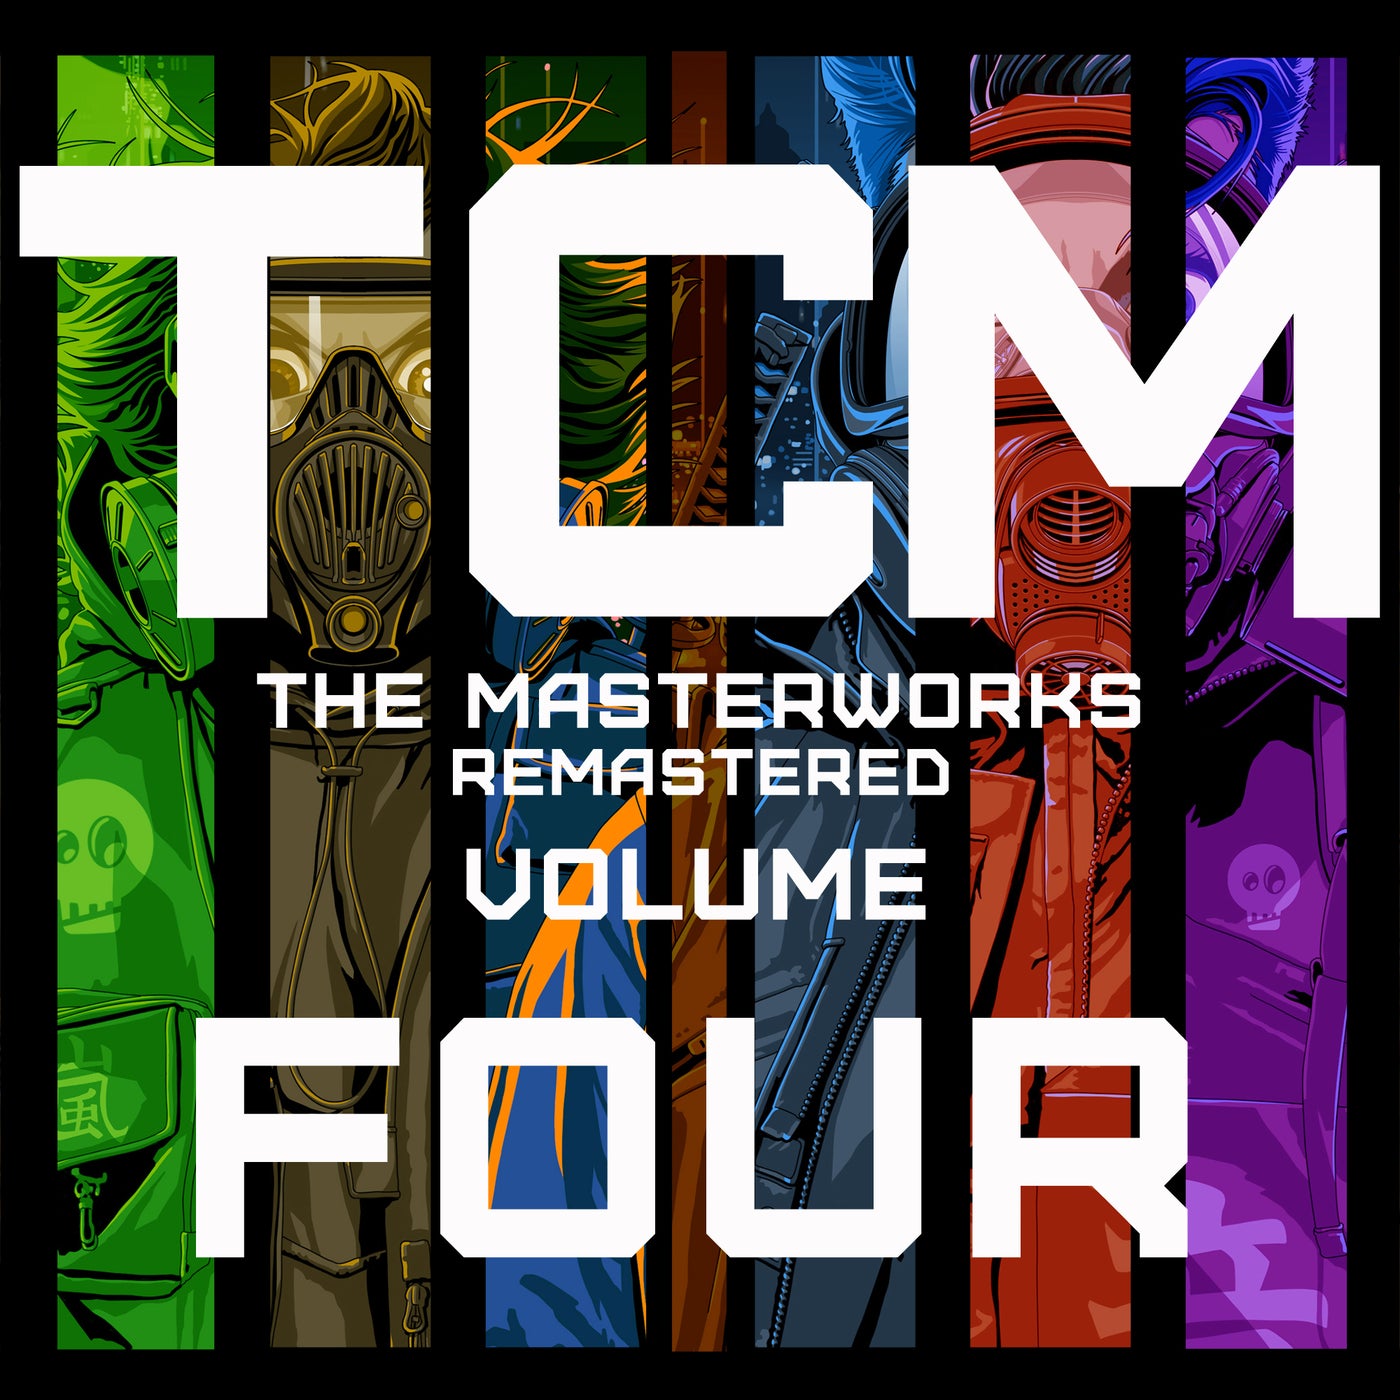 The Masterworks Remastered Volume 4